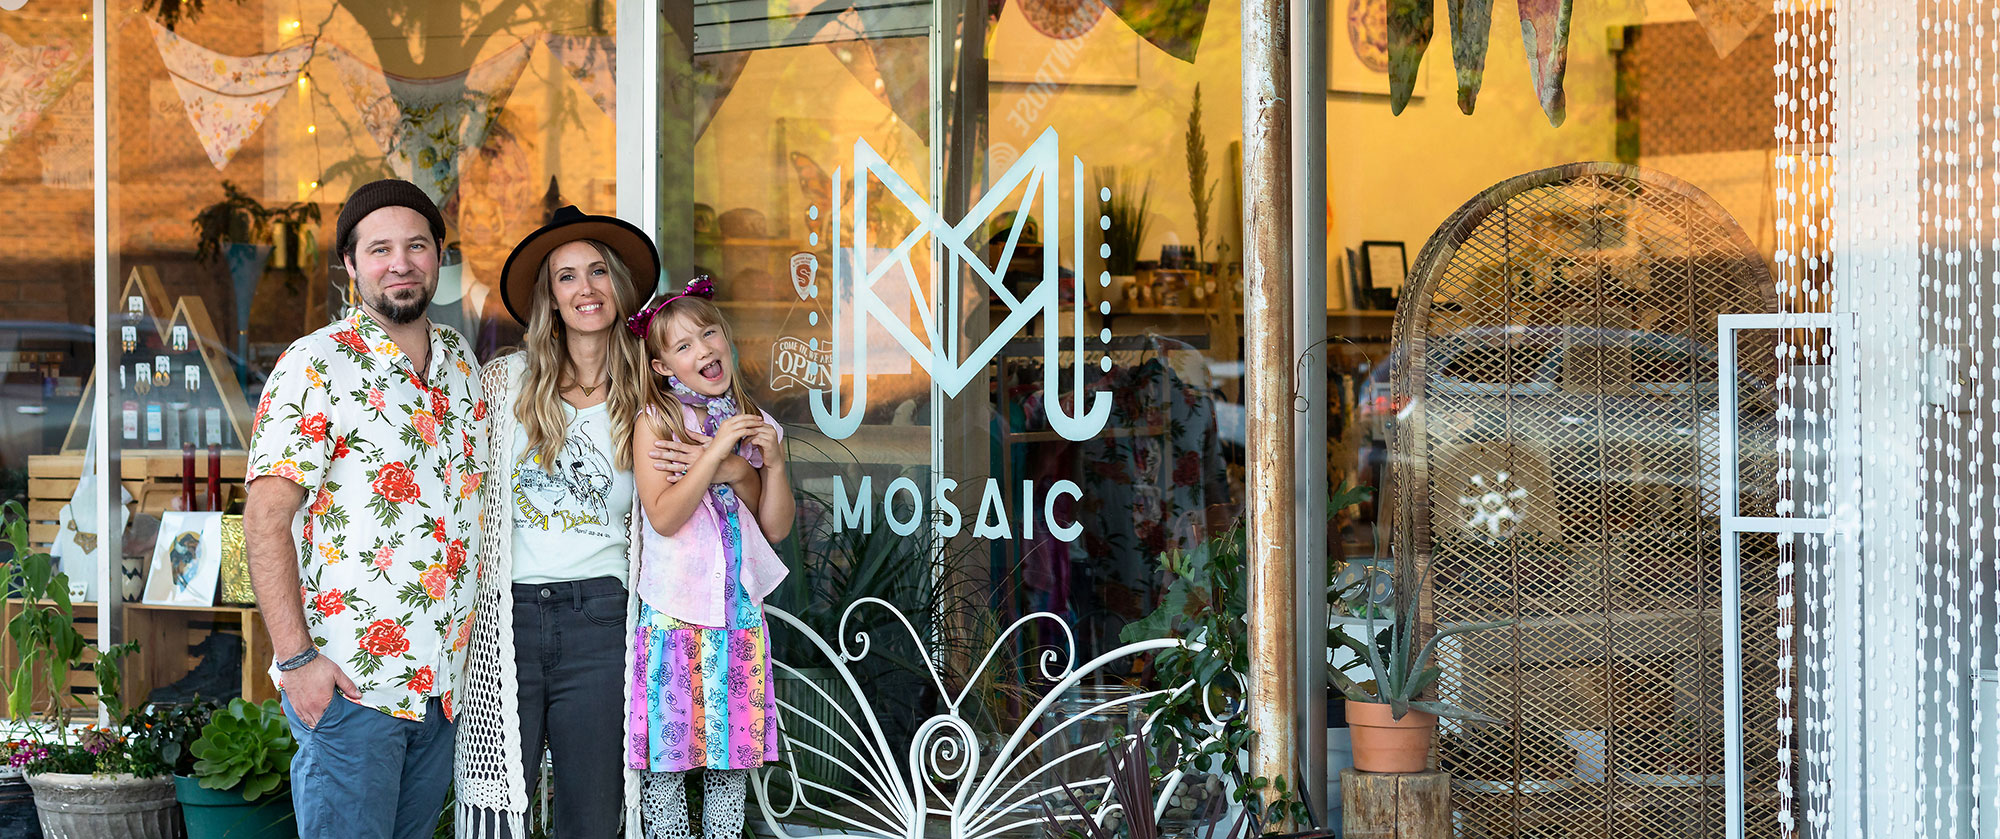 mosaic boutique, gallery, creative studio in downtown montrose, colorado